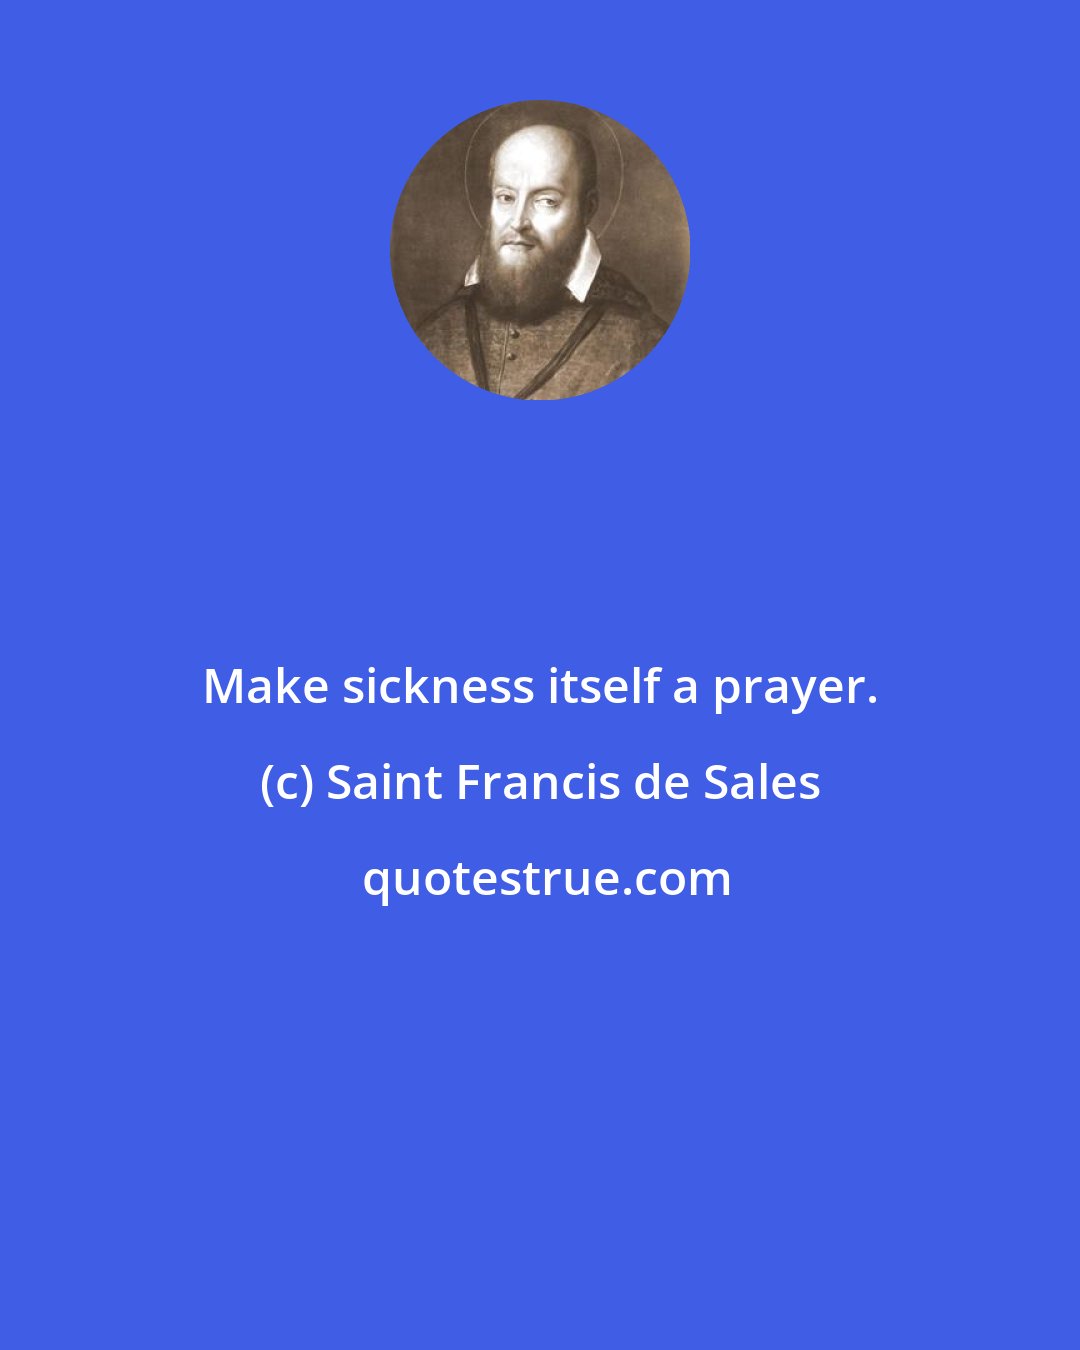 Saint Francis de Sales: Make sickness itself a prayer.